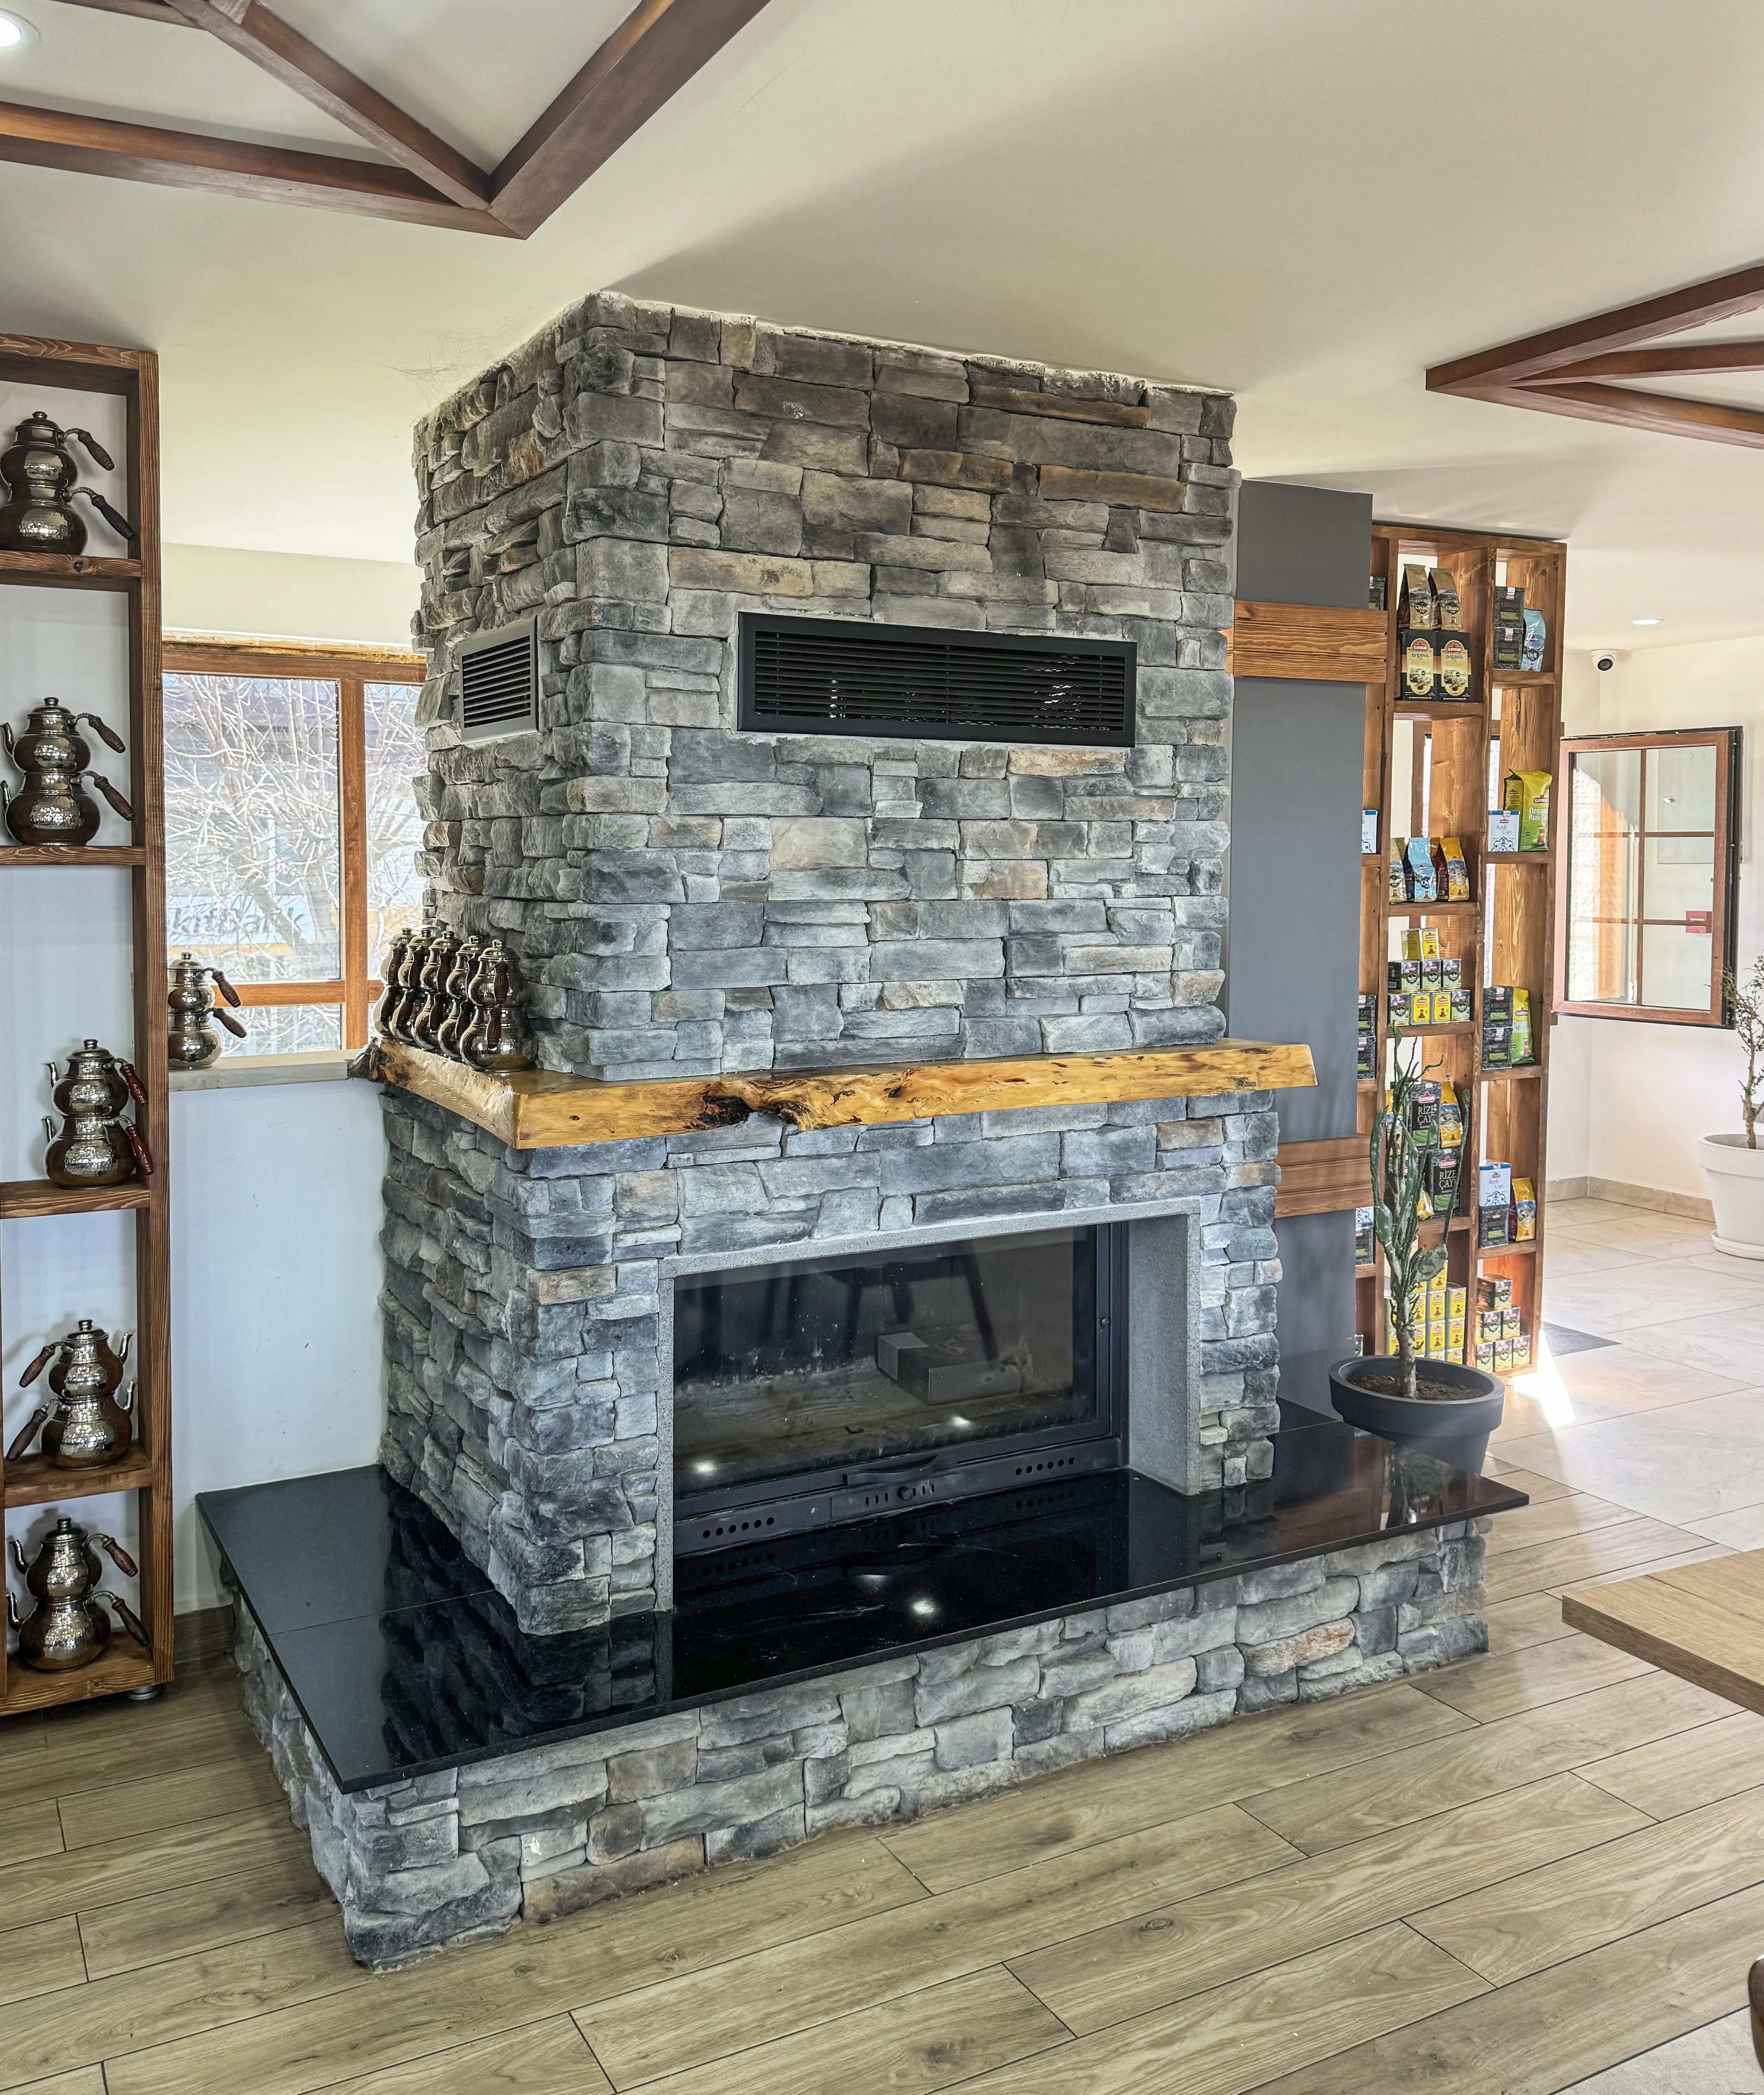 Fireplace with beautiful stone and hardwood flooring